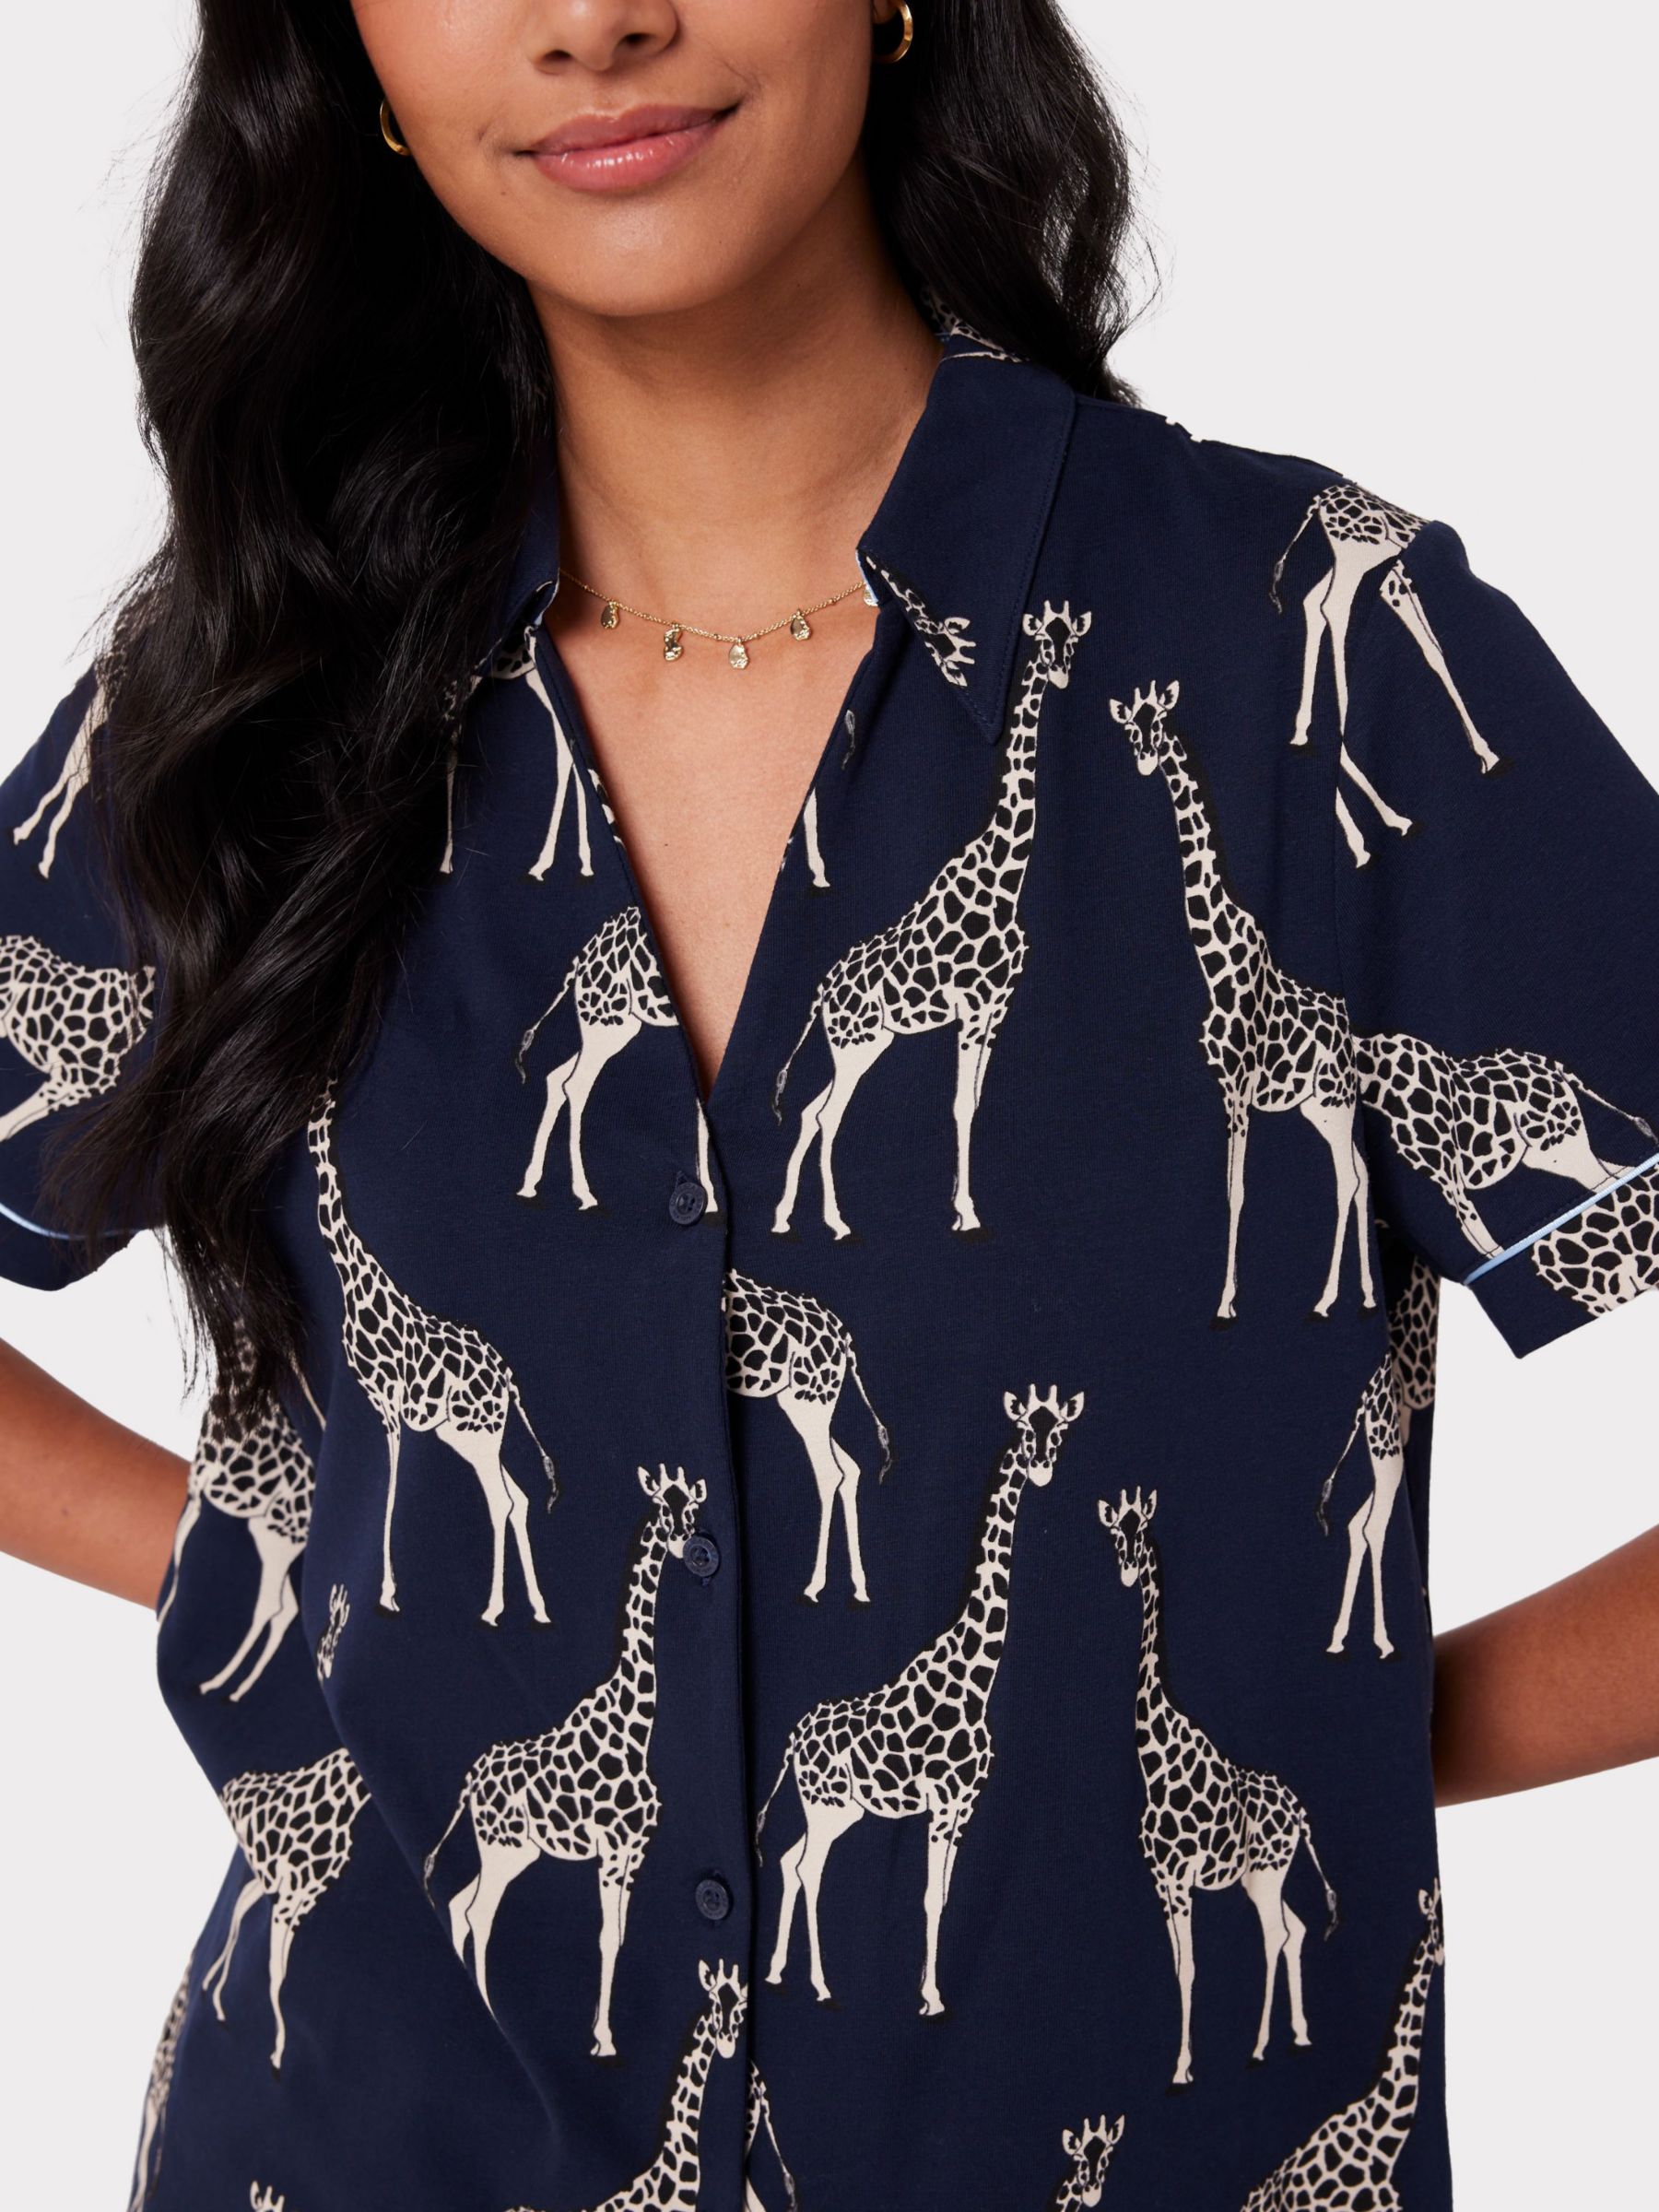 Chelsea Peers Organic Cotton Blend Giraffe Print Shorts Pyjama Set, Navy, 8